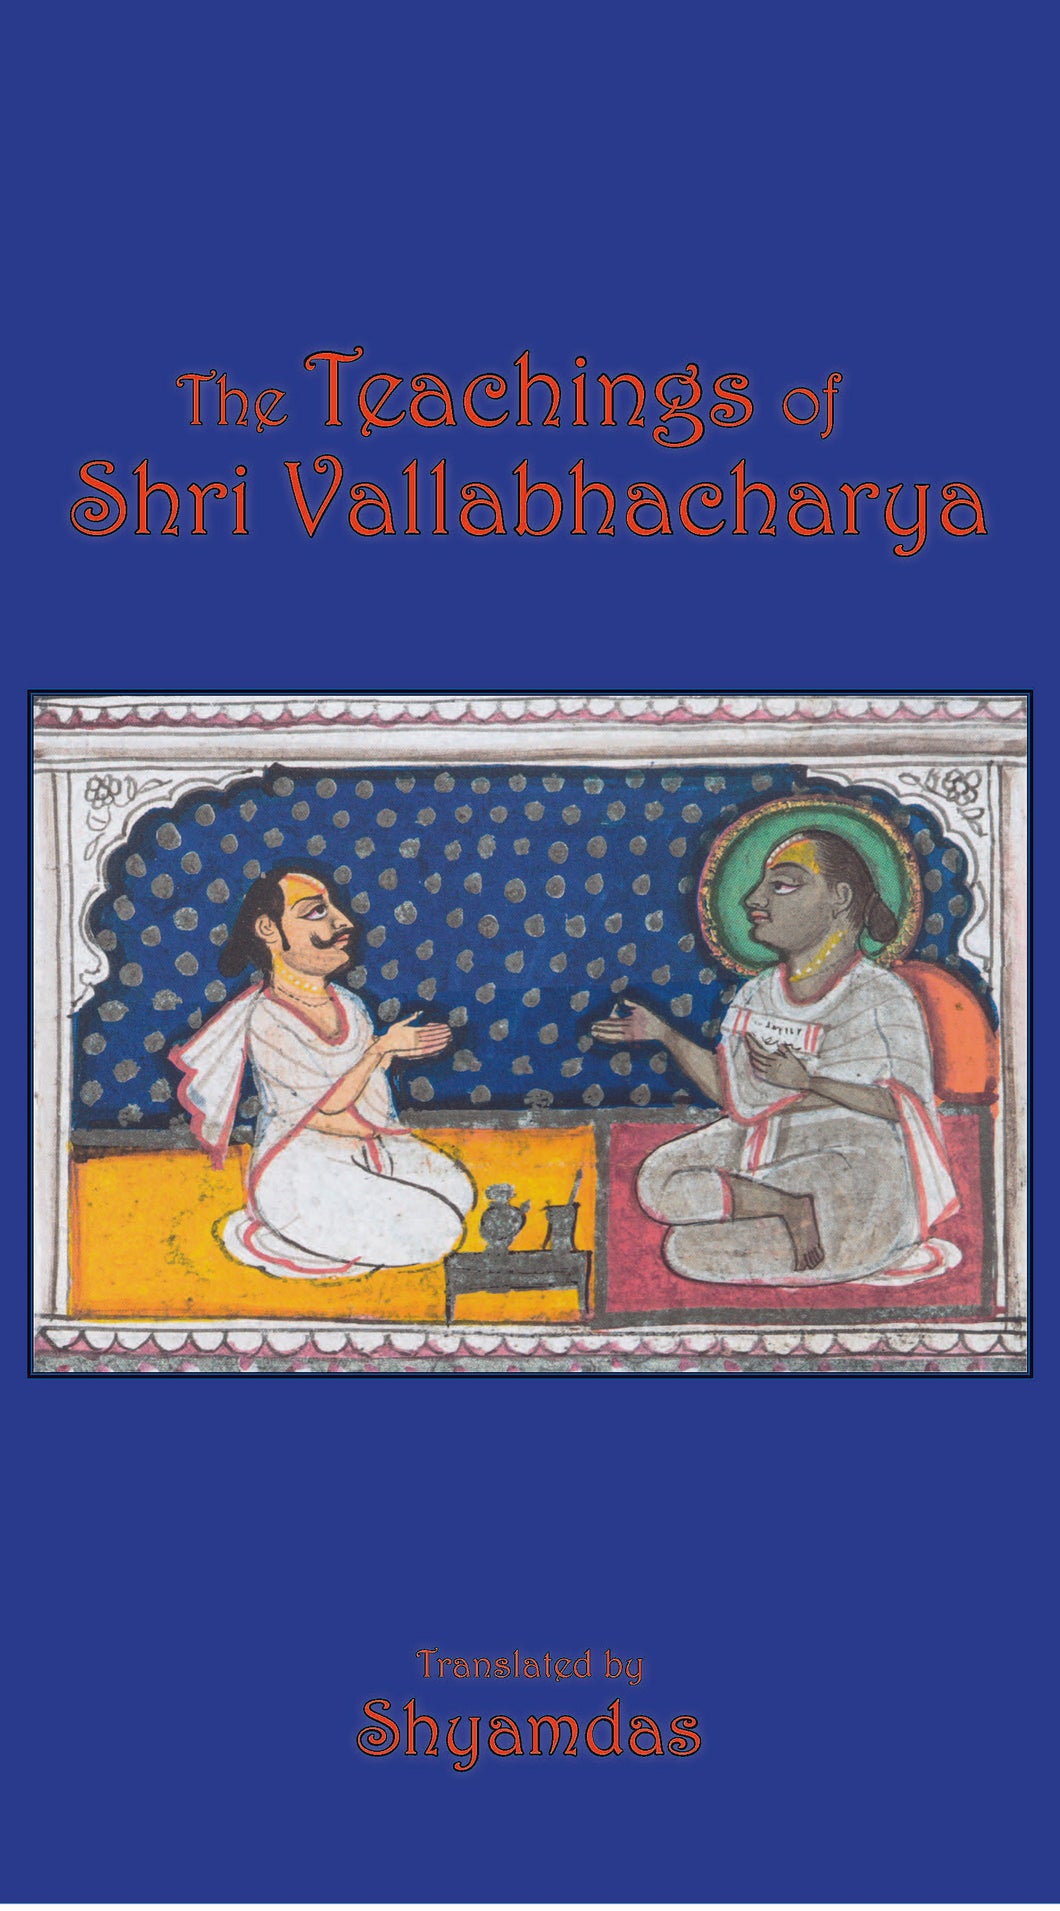 The Teachings of Shri Vallabhacharya, by Shyamdas (Third Edition)